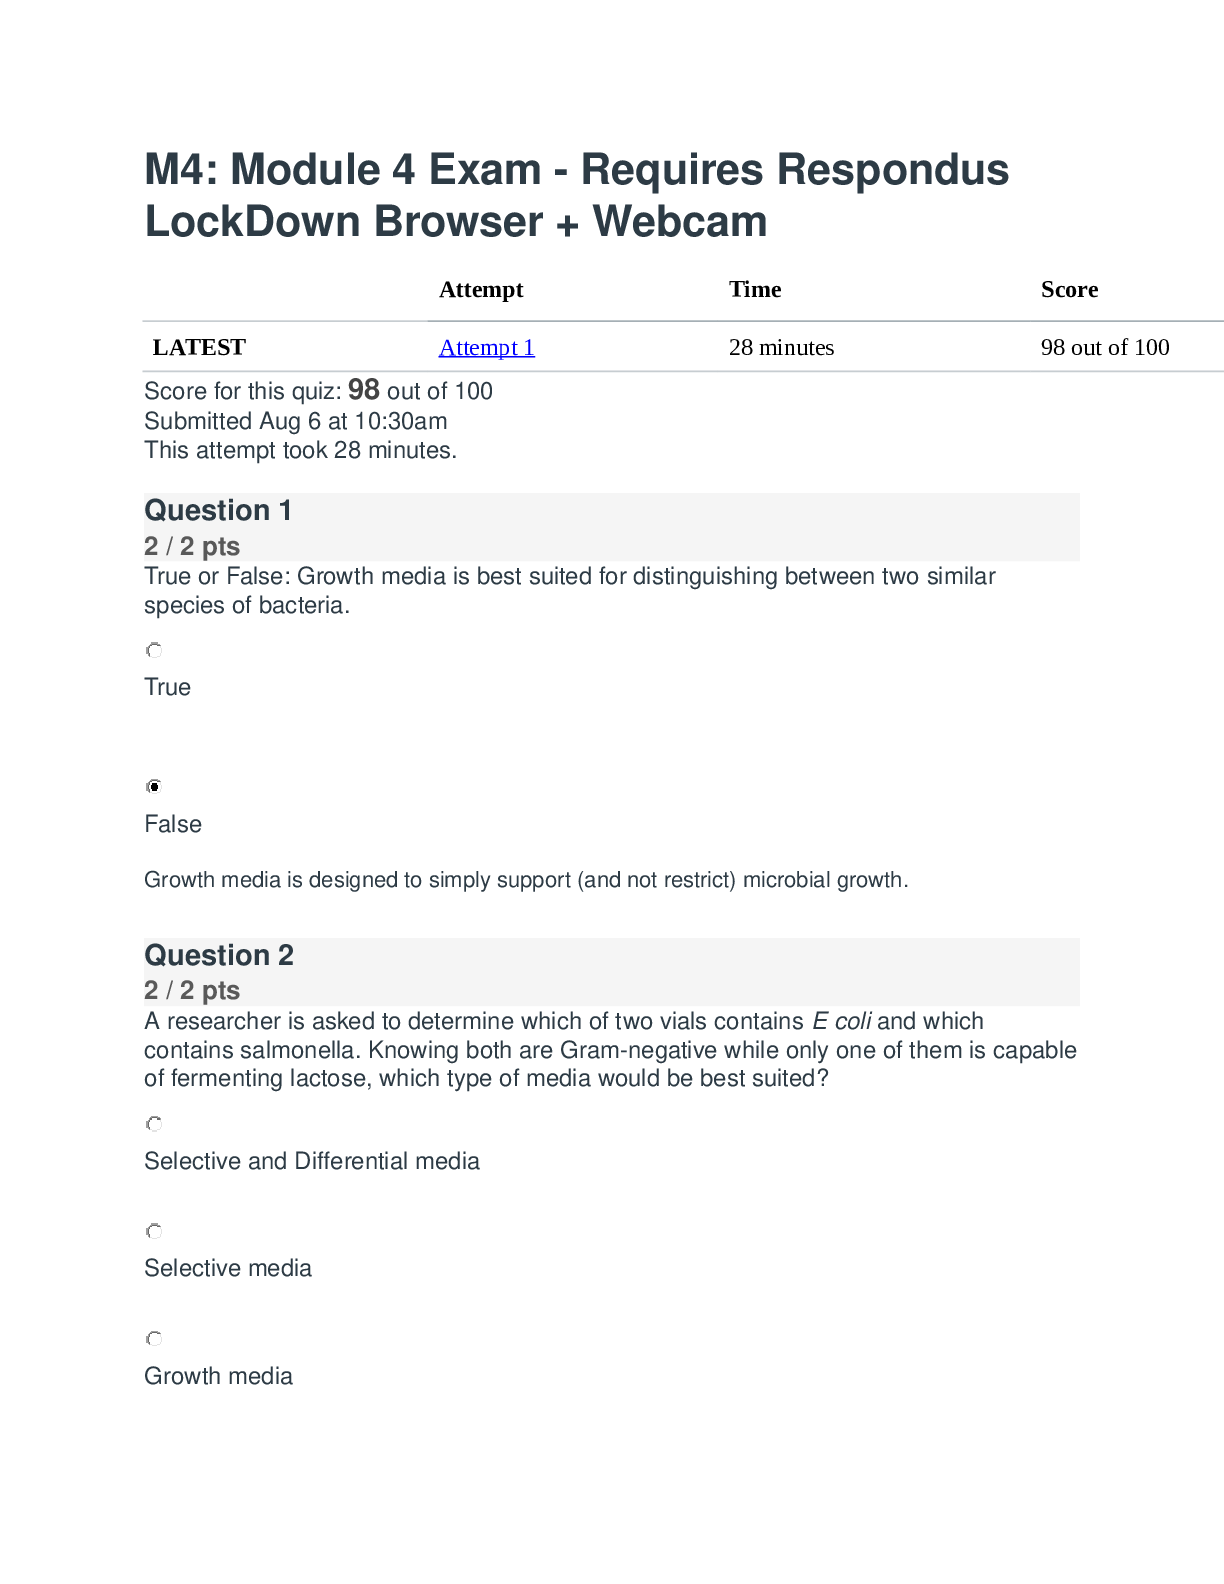 Module 4 Exam - Bio 171 Requires Respondus LockDown Browser....